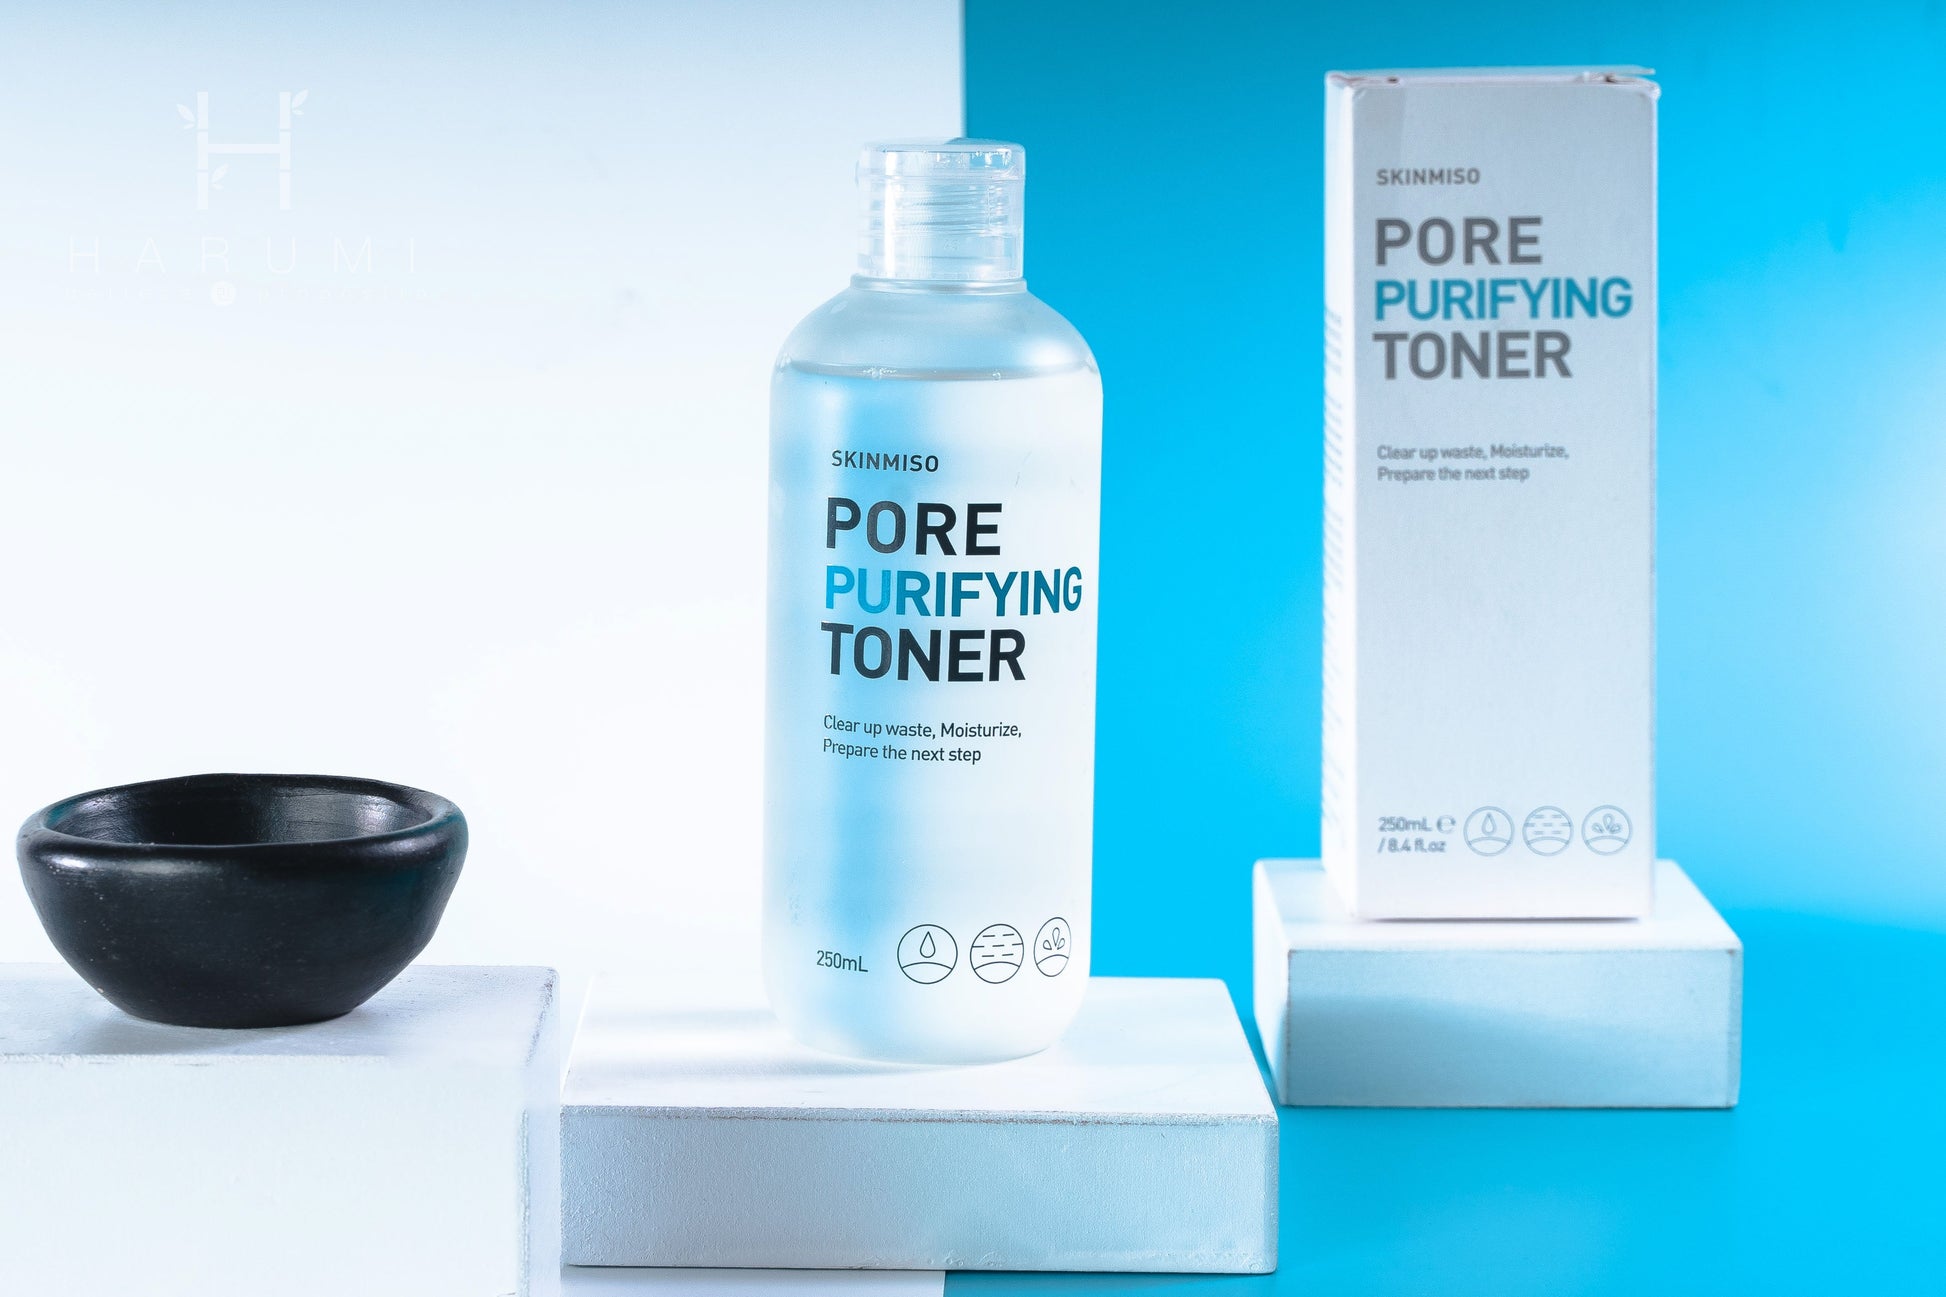 Skinmiso Pore Purifying Toner Skincare maquillaje productos de belleza coreanos en Colombia kbeauty